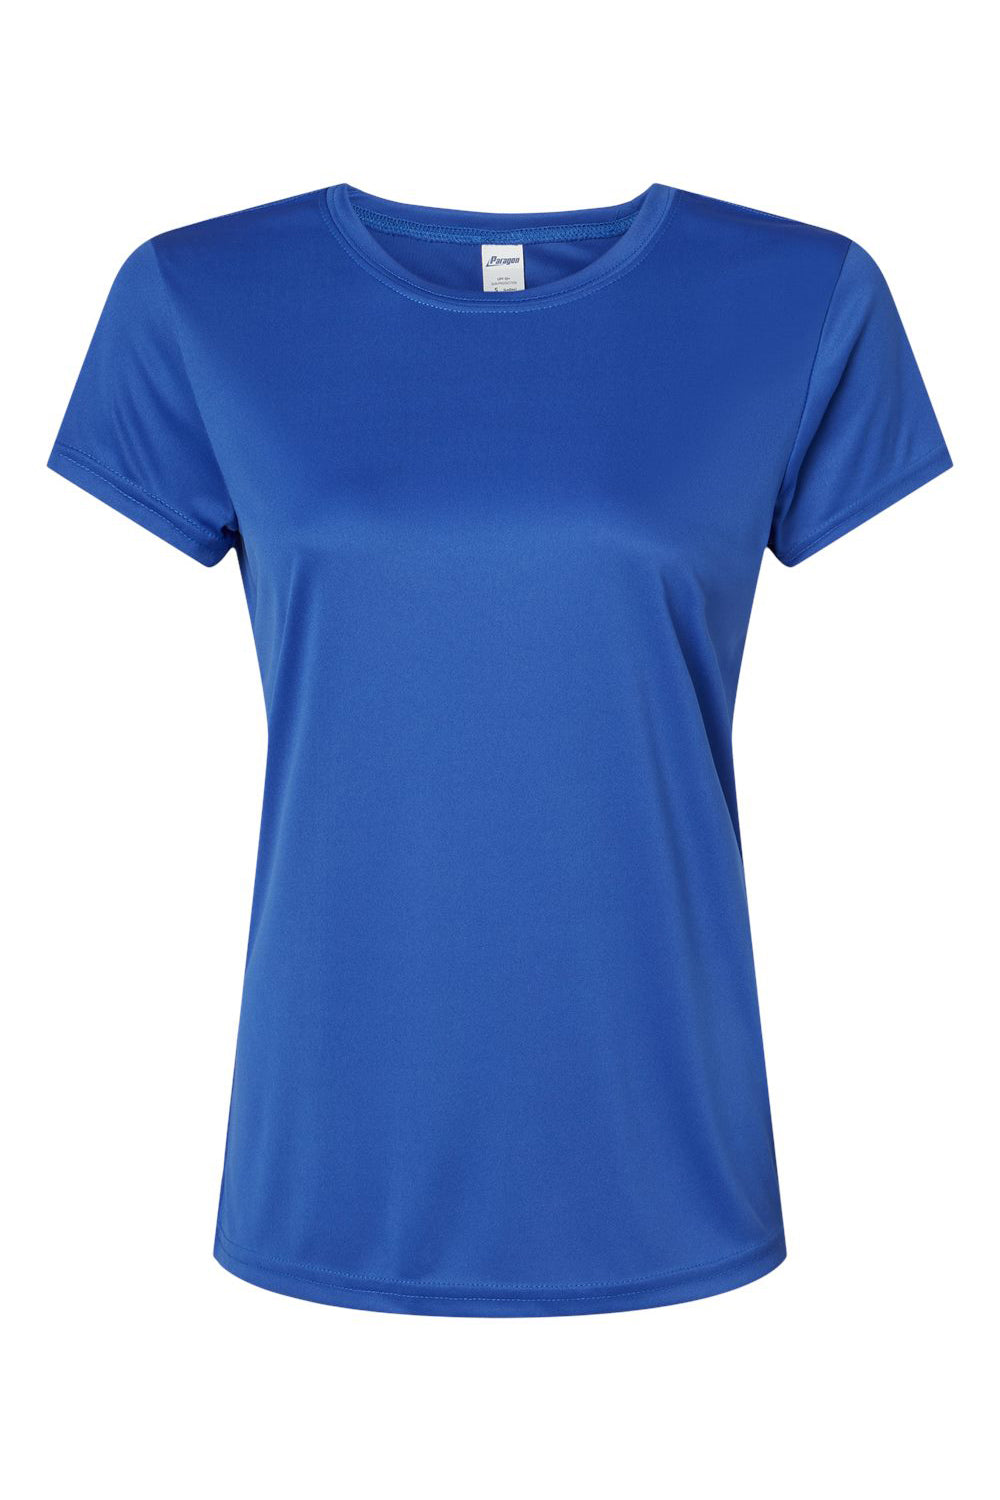 Paragon 204 Womens Islander Performance Short Sleeve Crewneck T-Shirt Royal Blue Flat Front